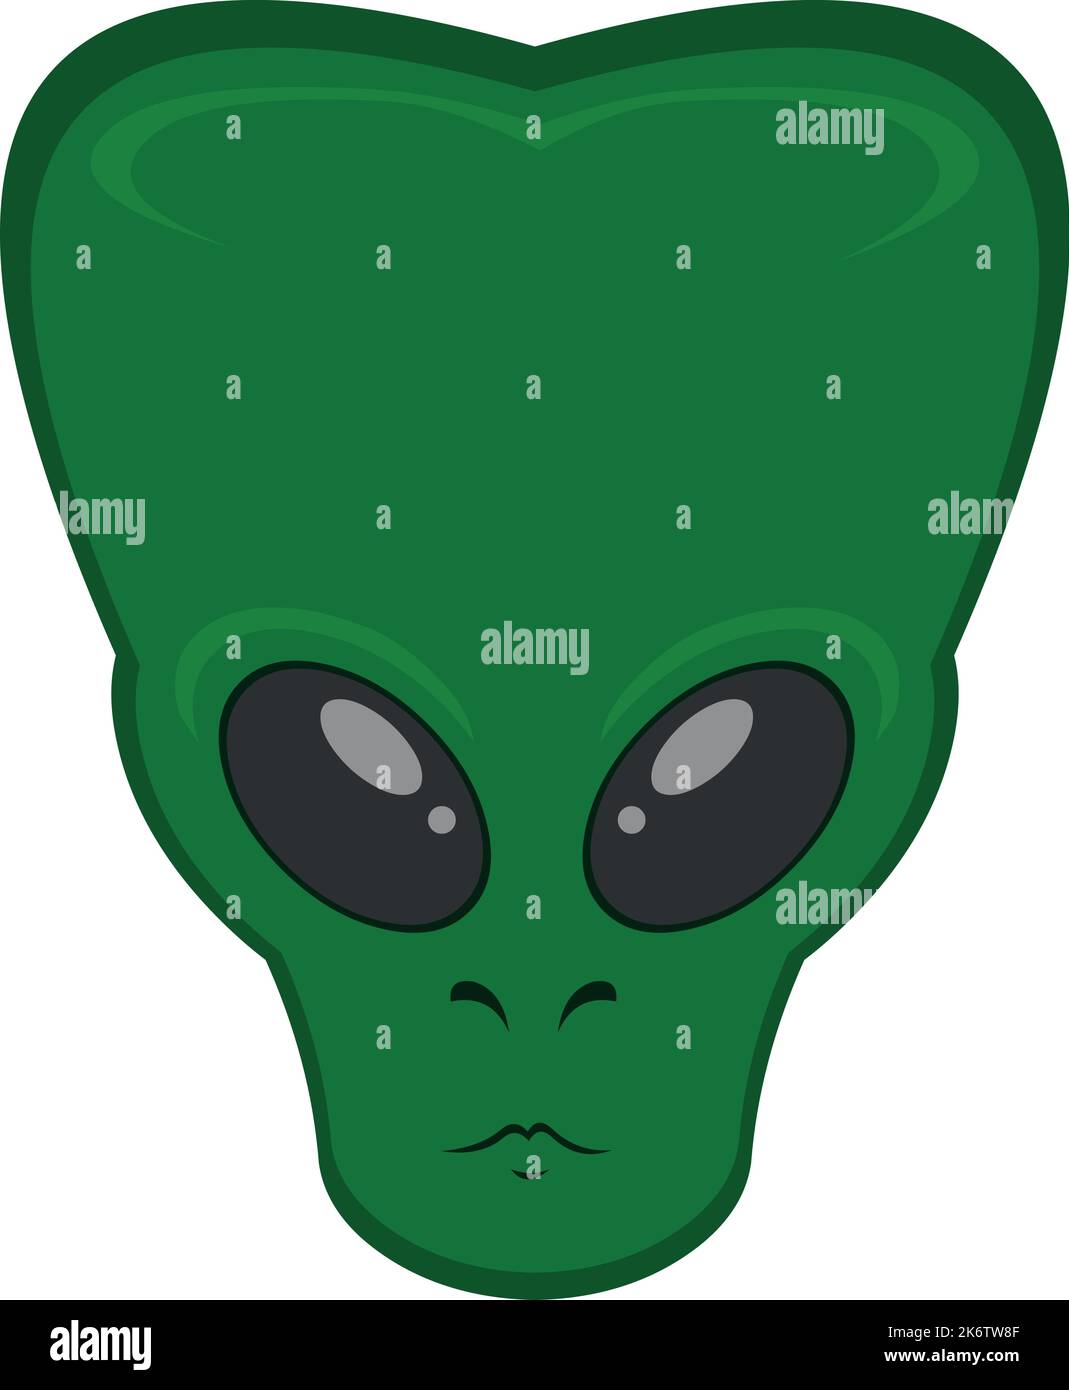 Vector illustration of the head of an alien or extraterrestrial cartoon Stock Vector